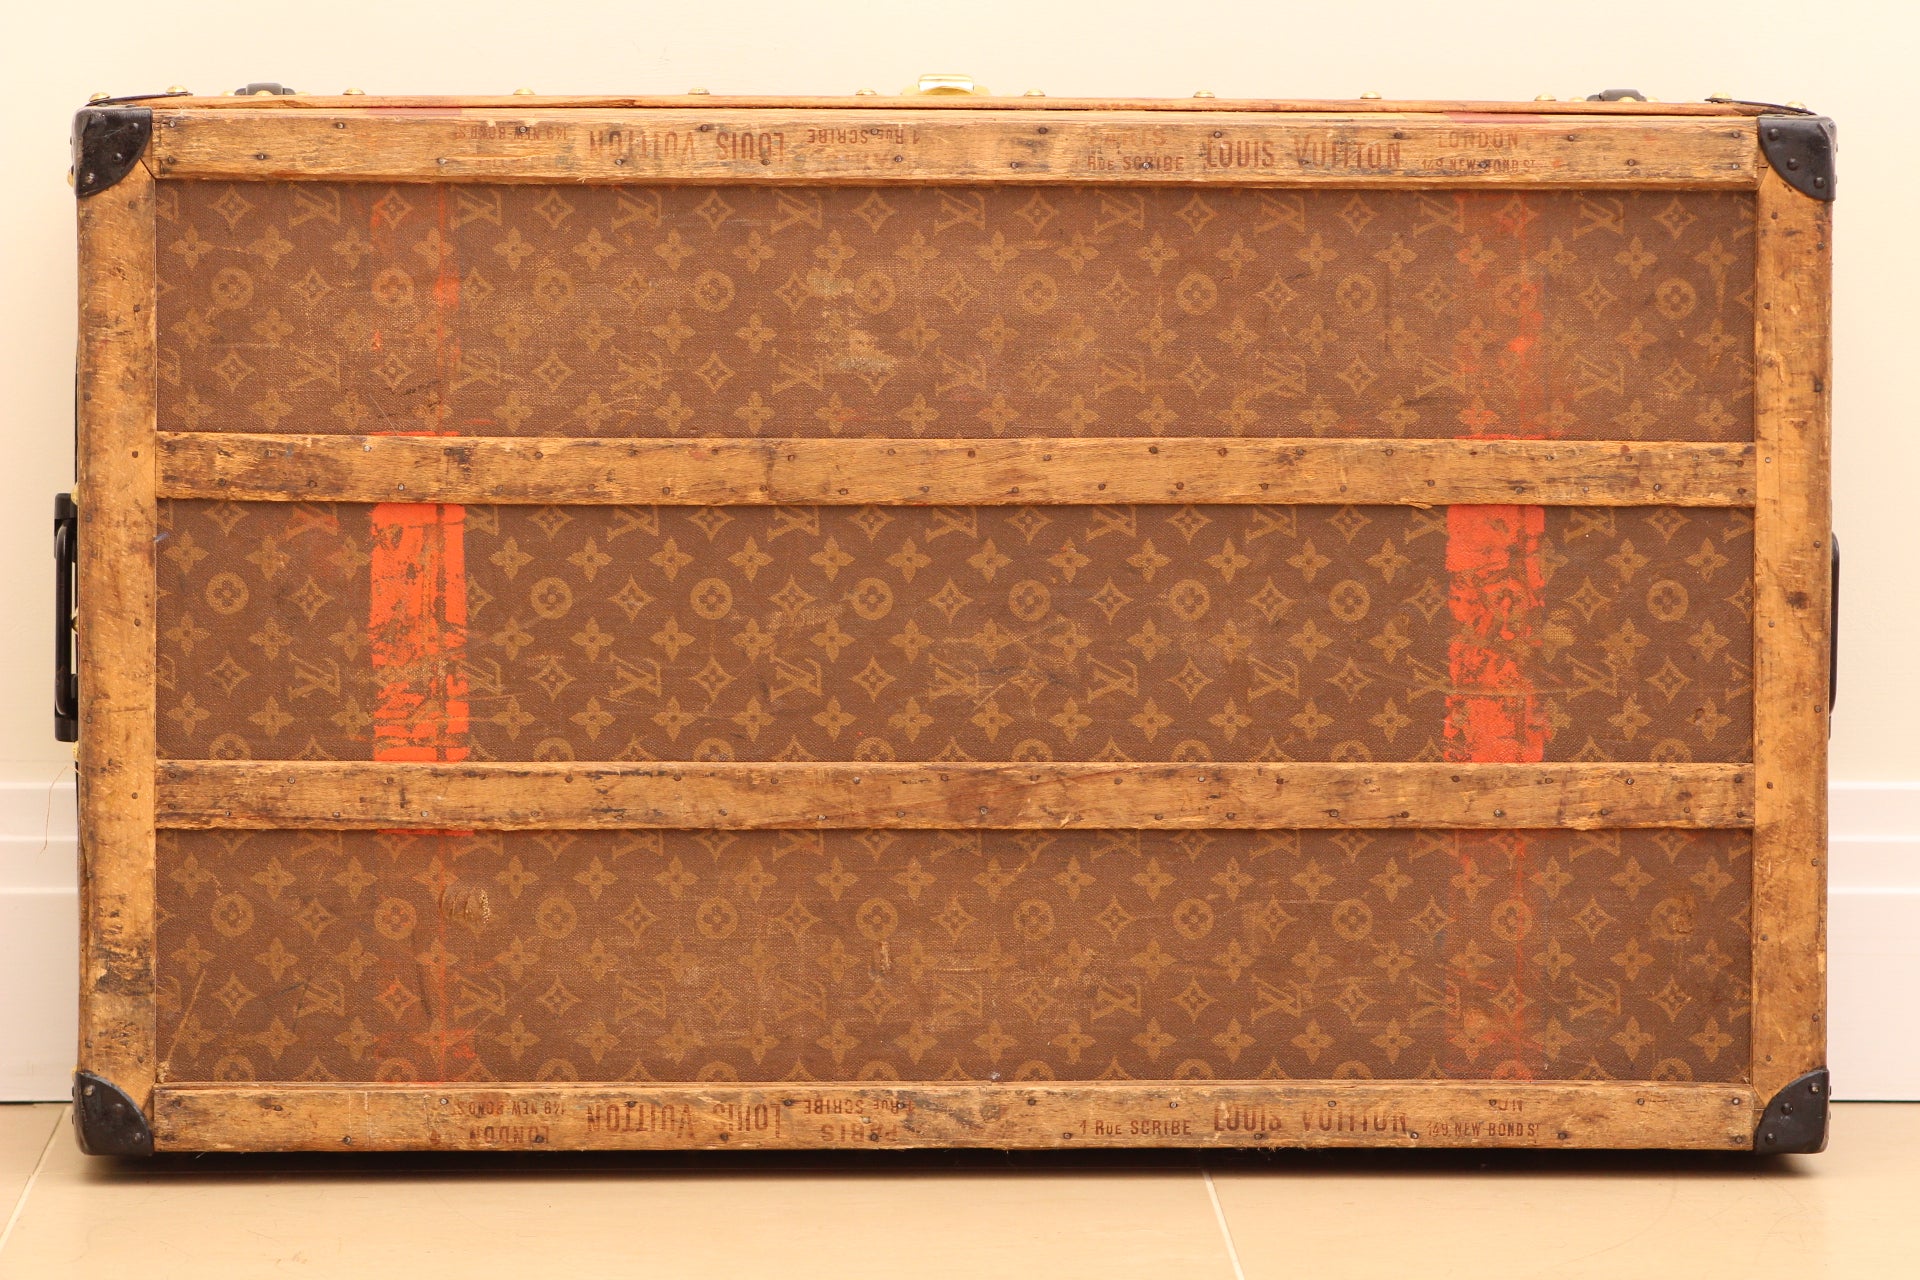 Louis Vuitton Luxury Monogram Trunk Collection